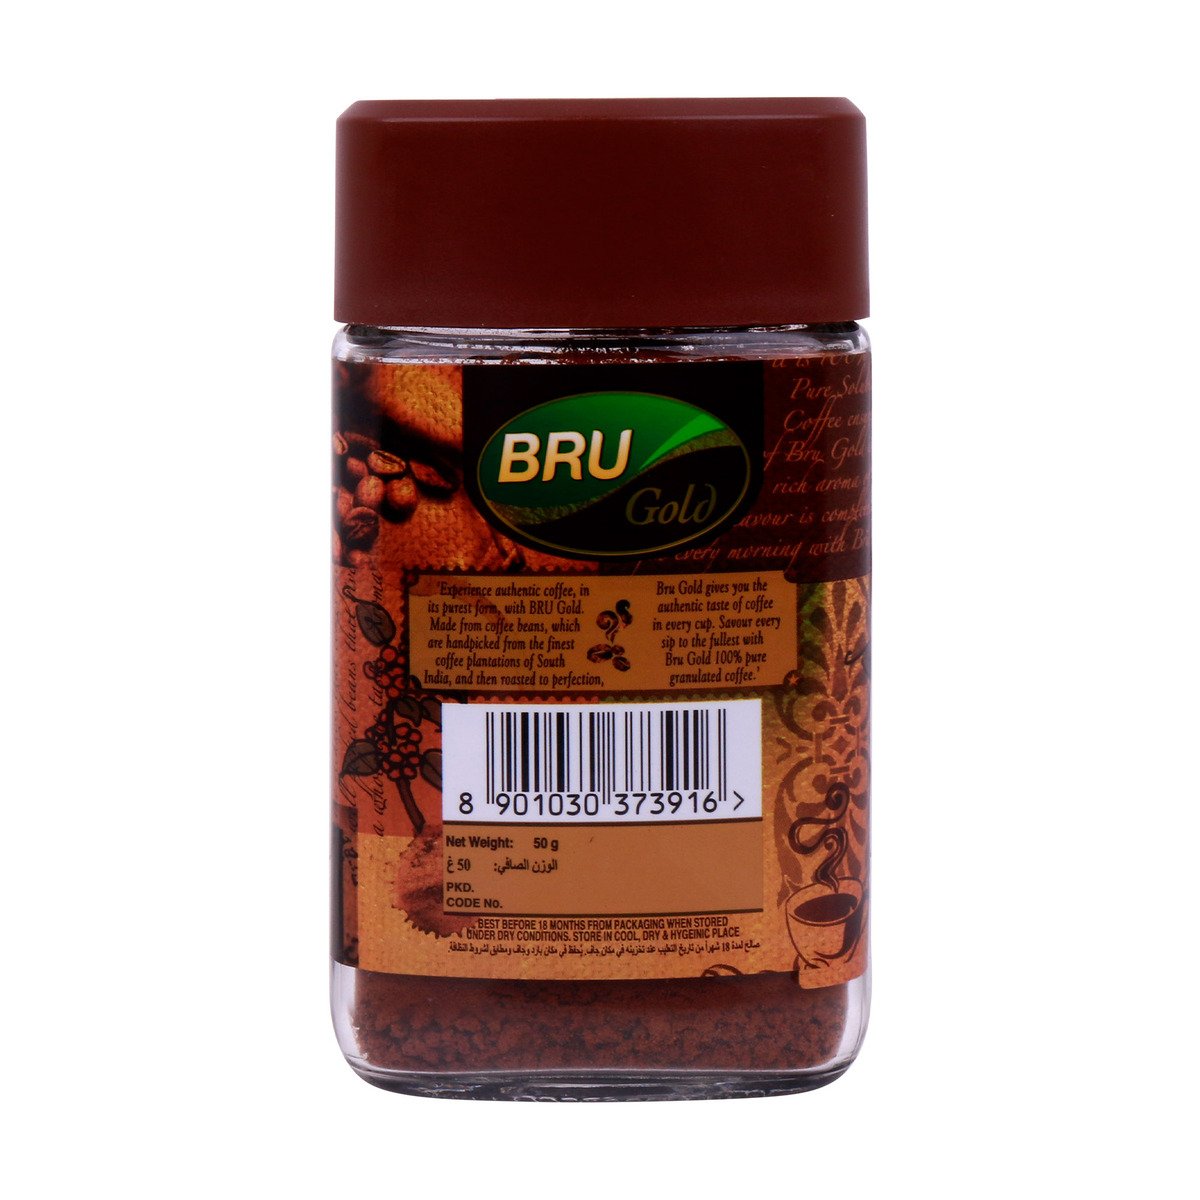 Bru Coffee Gold 50 g